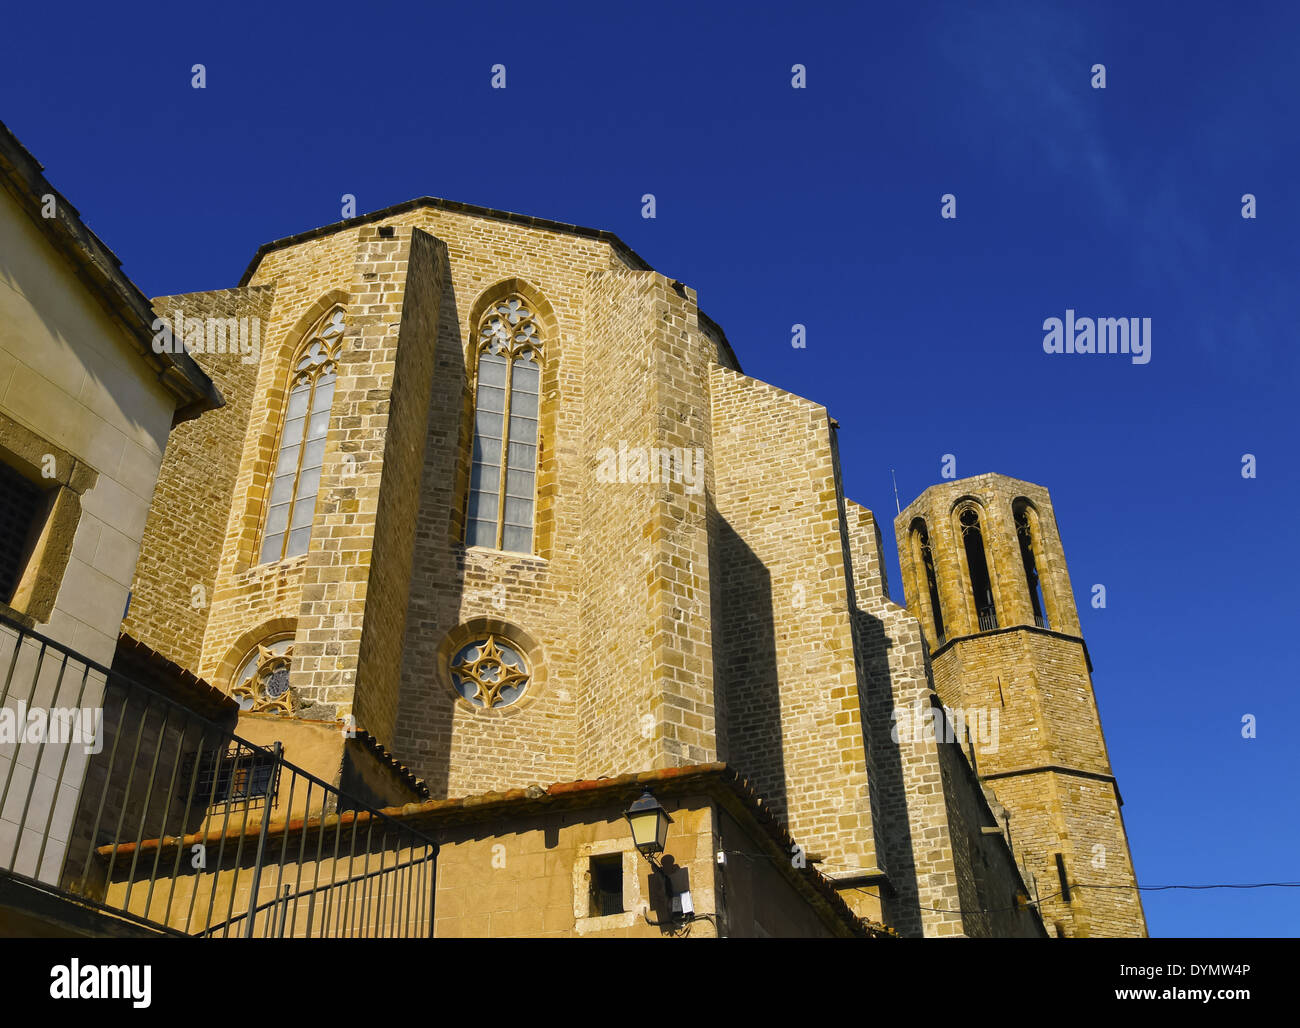 Monestir de Pedralbes - Monasterio de Pedralbes en Barcelona, Cataluña, España Foto de stock